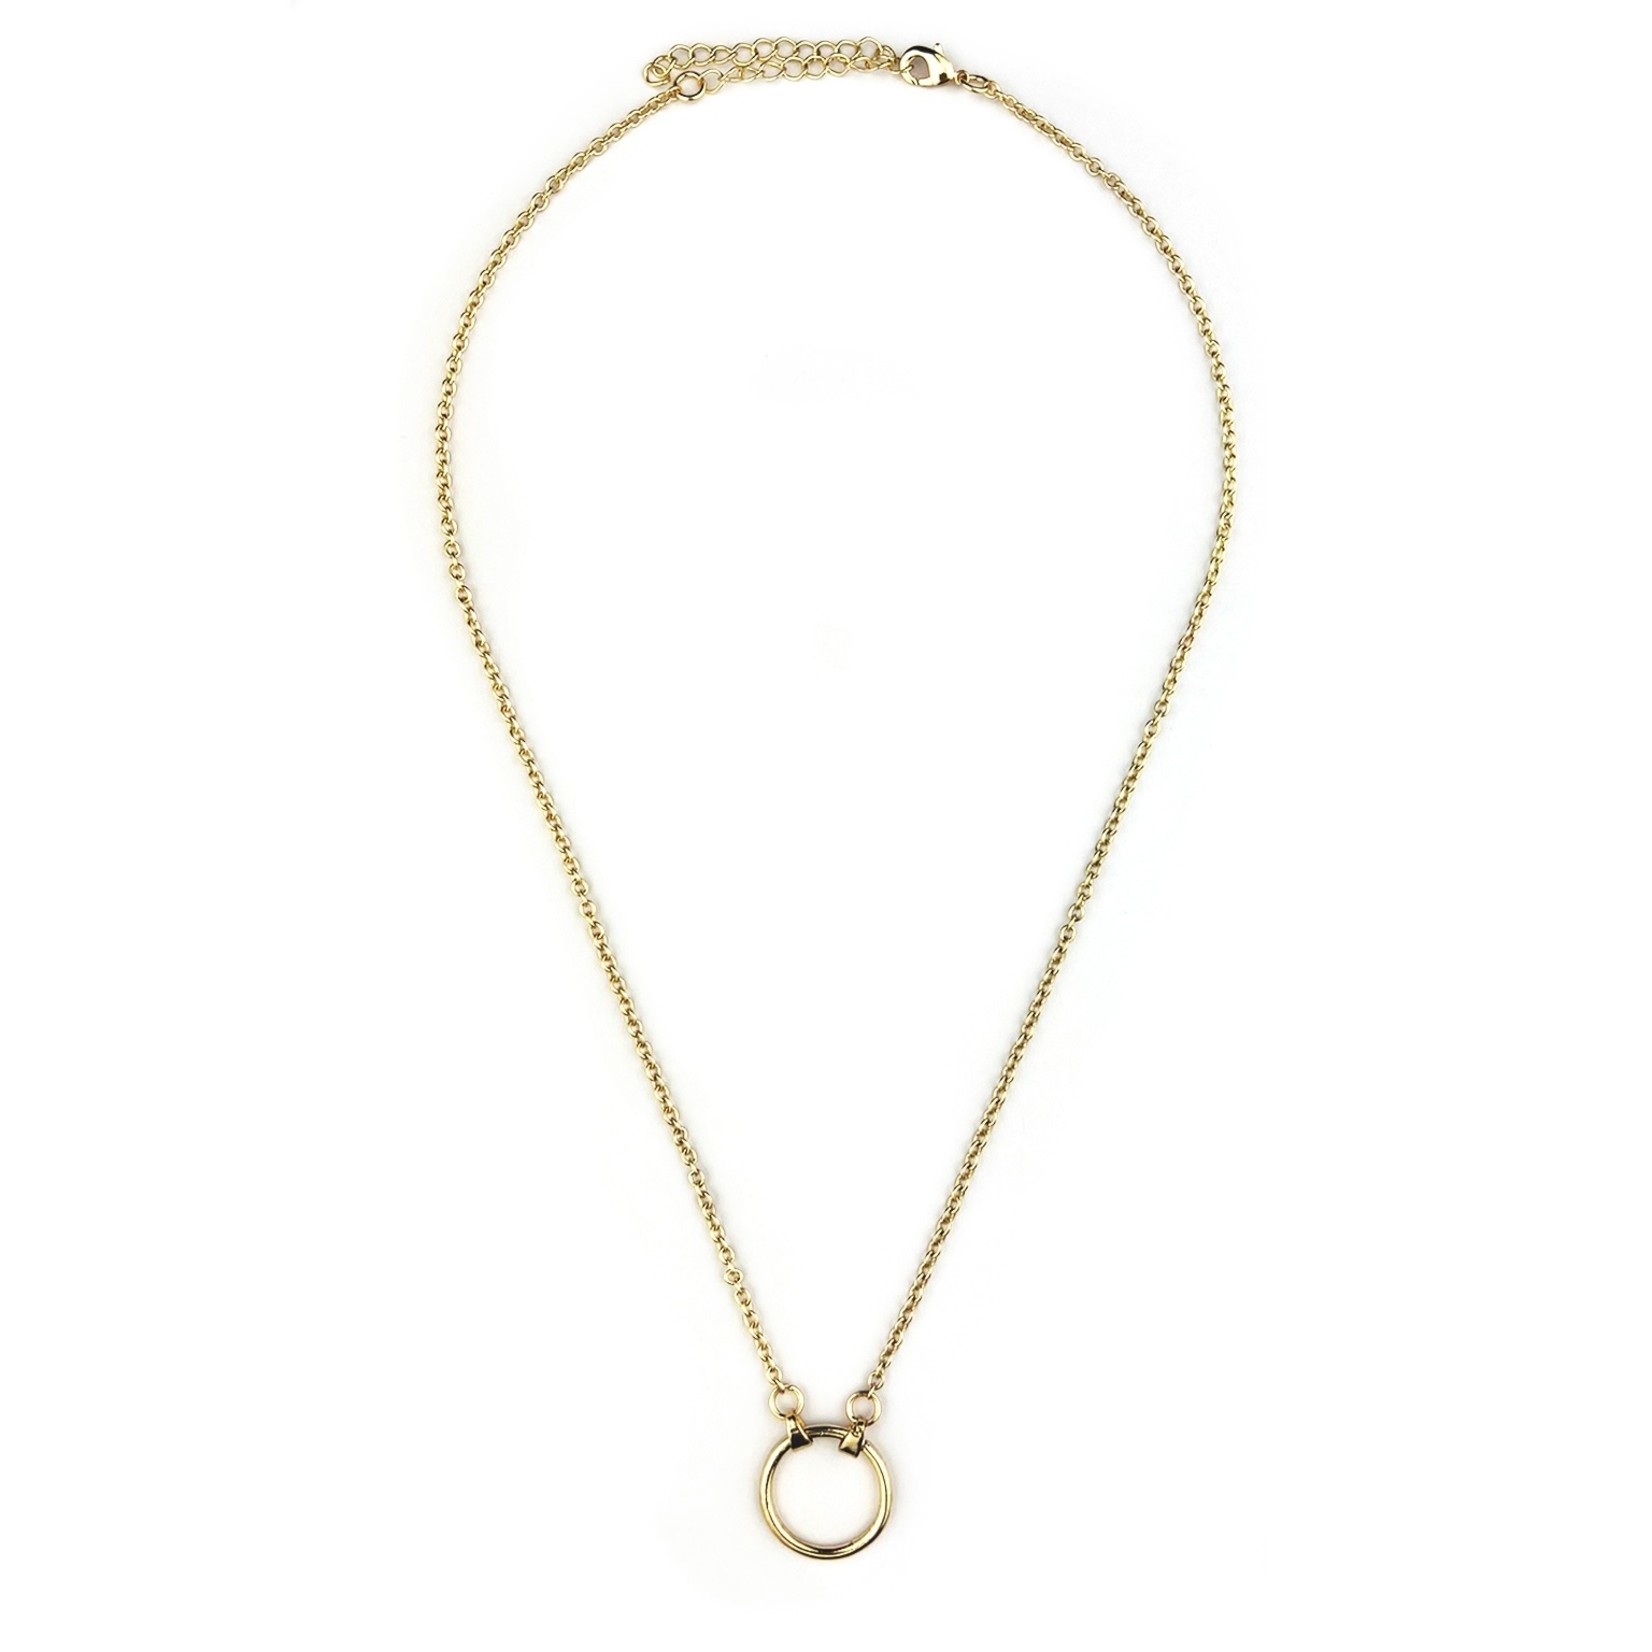 Dainty Gold Chain Necklace with Circle Pendant 1pc/$6ea *3pcs/$4.50ea *6pcs/$3ea